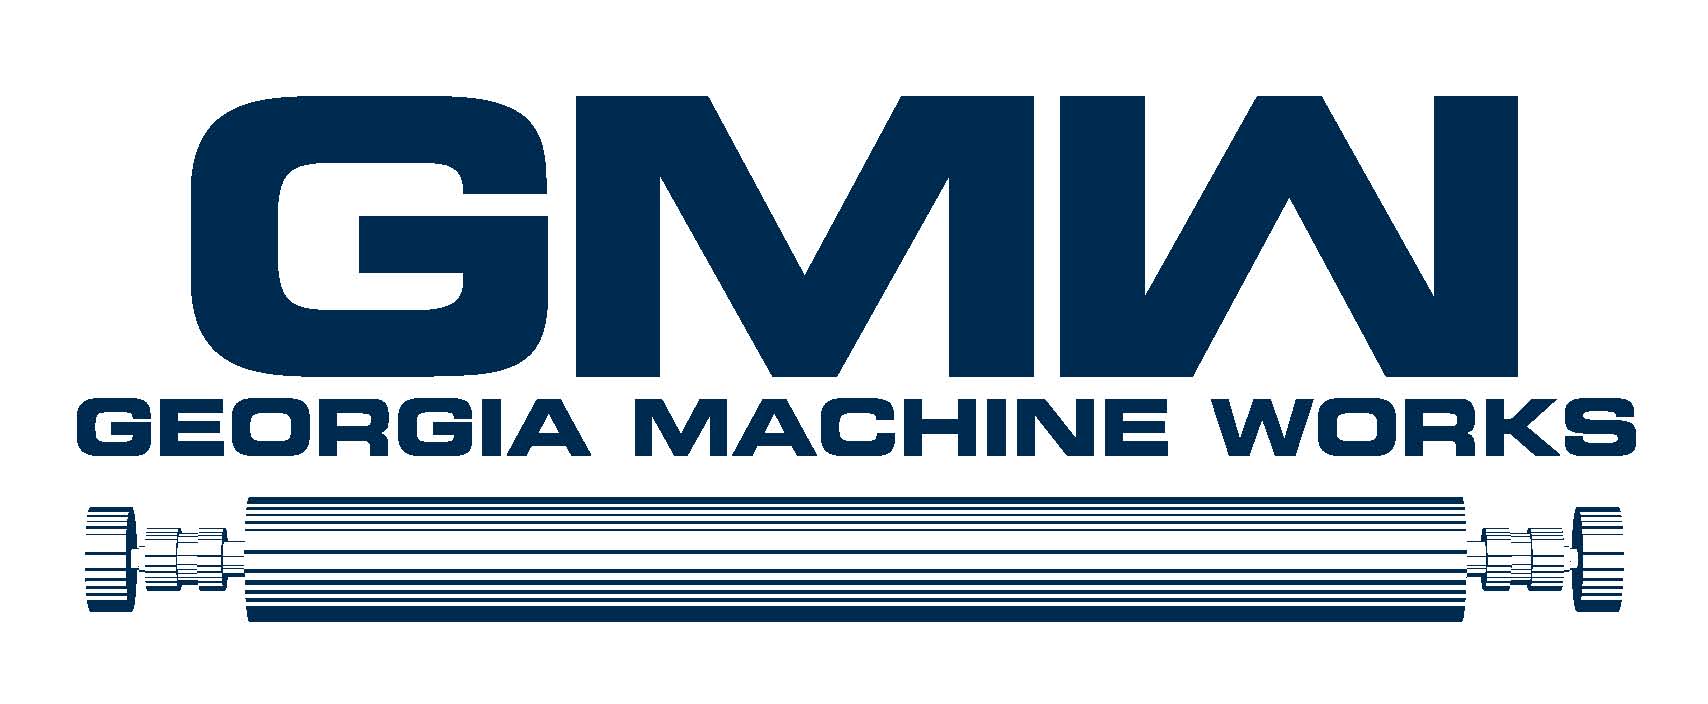 Georgia Machine Works